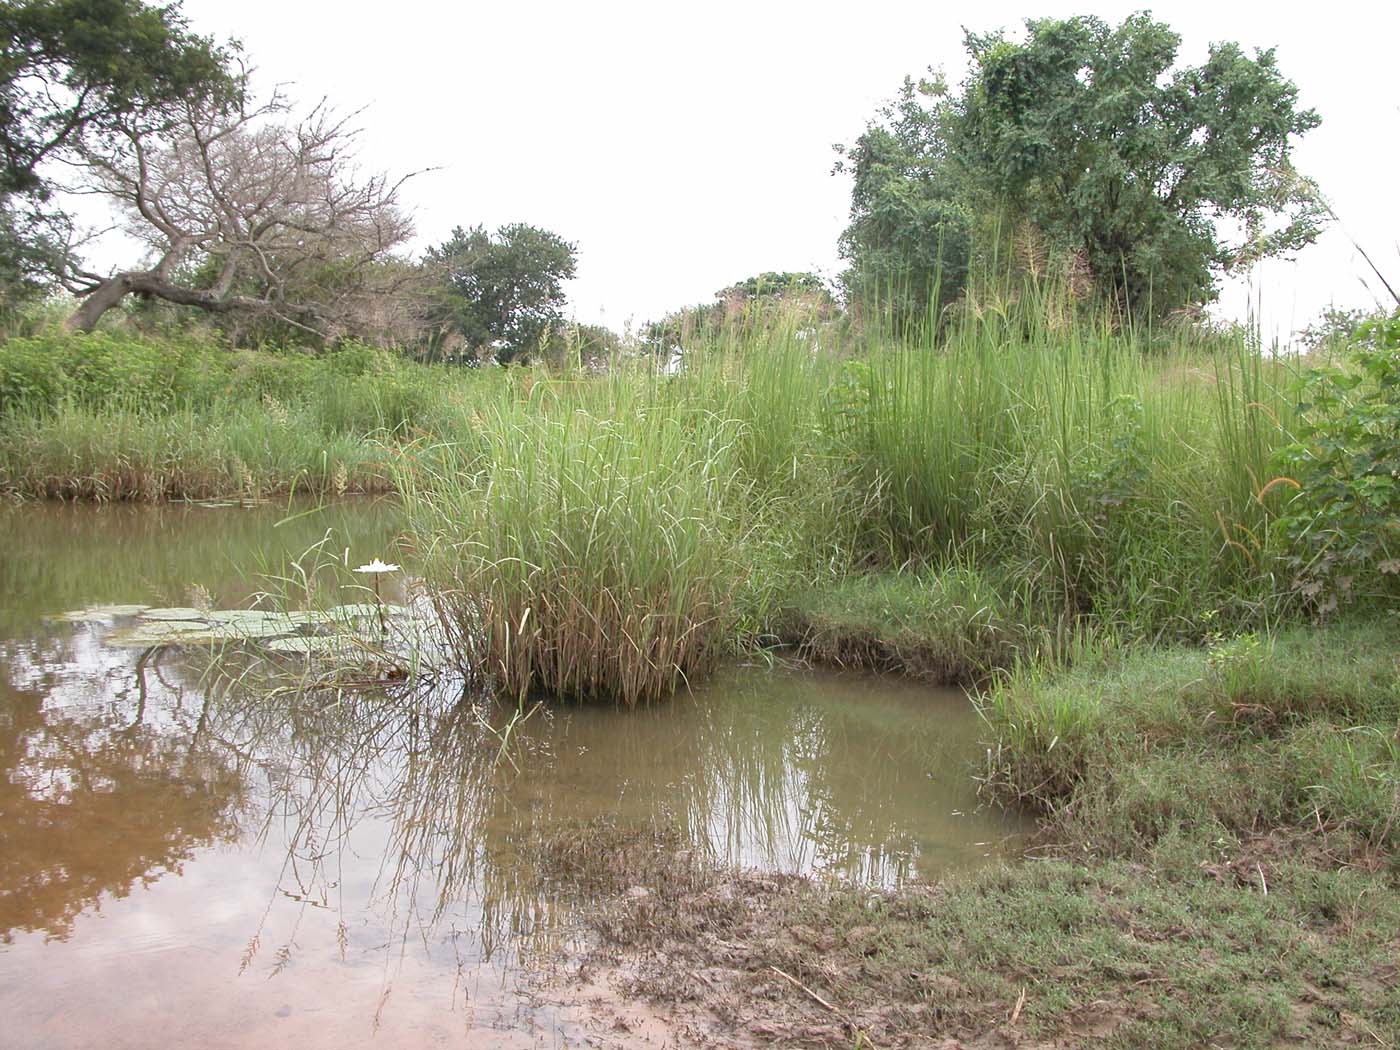 Elephant grass during the rainy season